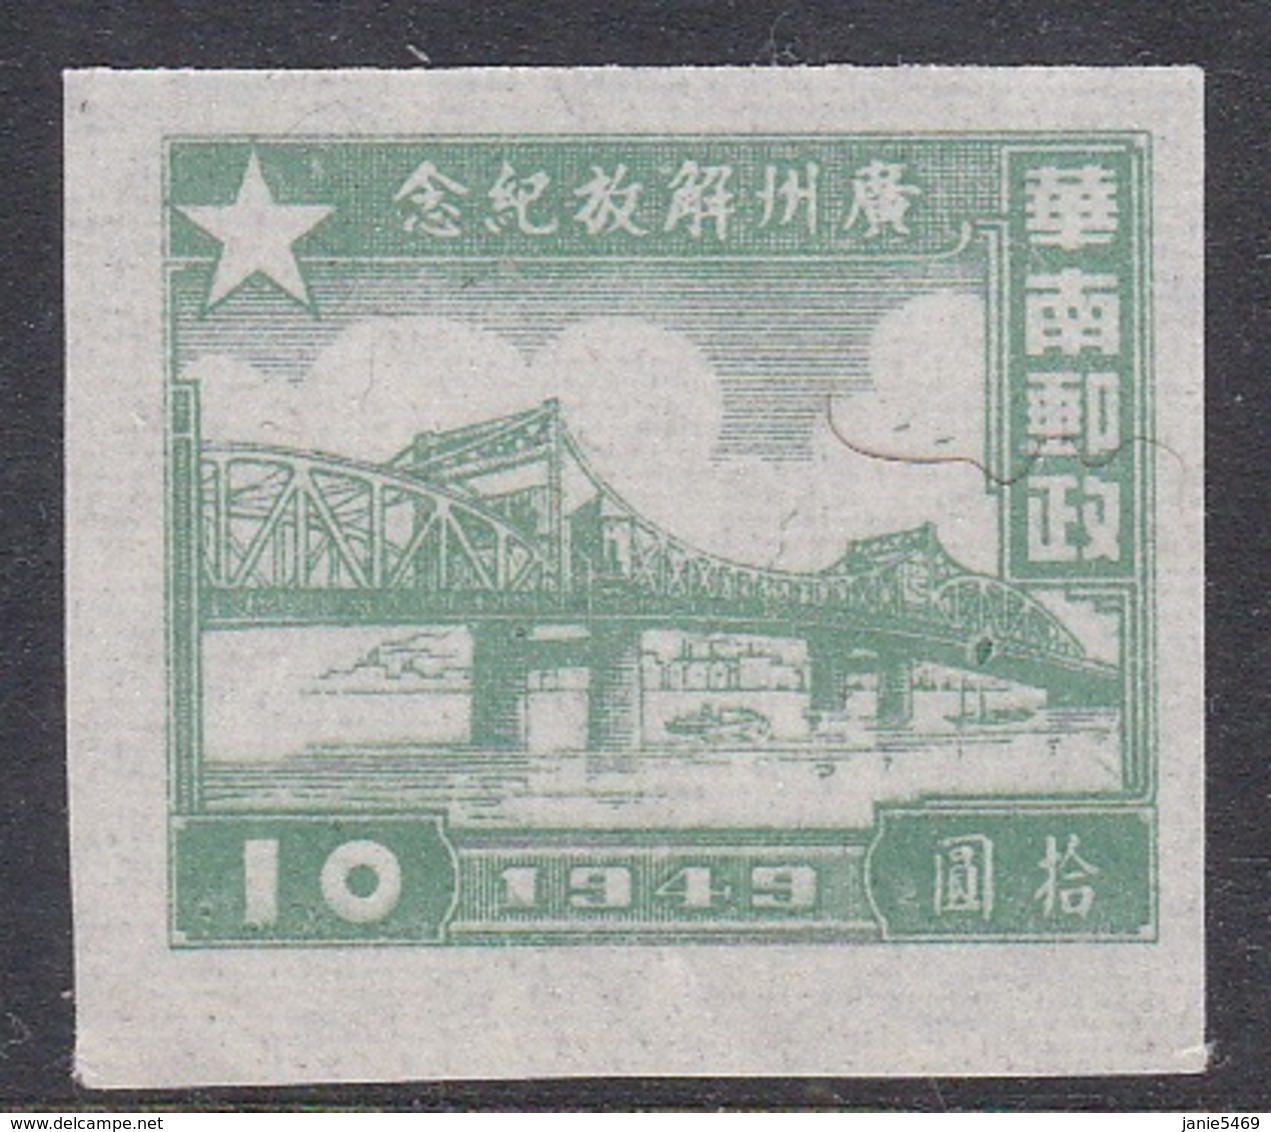 China South China Scott 7L1 1949 Pearl River Bridge, 10 Green, Mint Never Hinged - Southern-China 1949-50